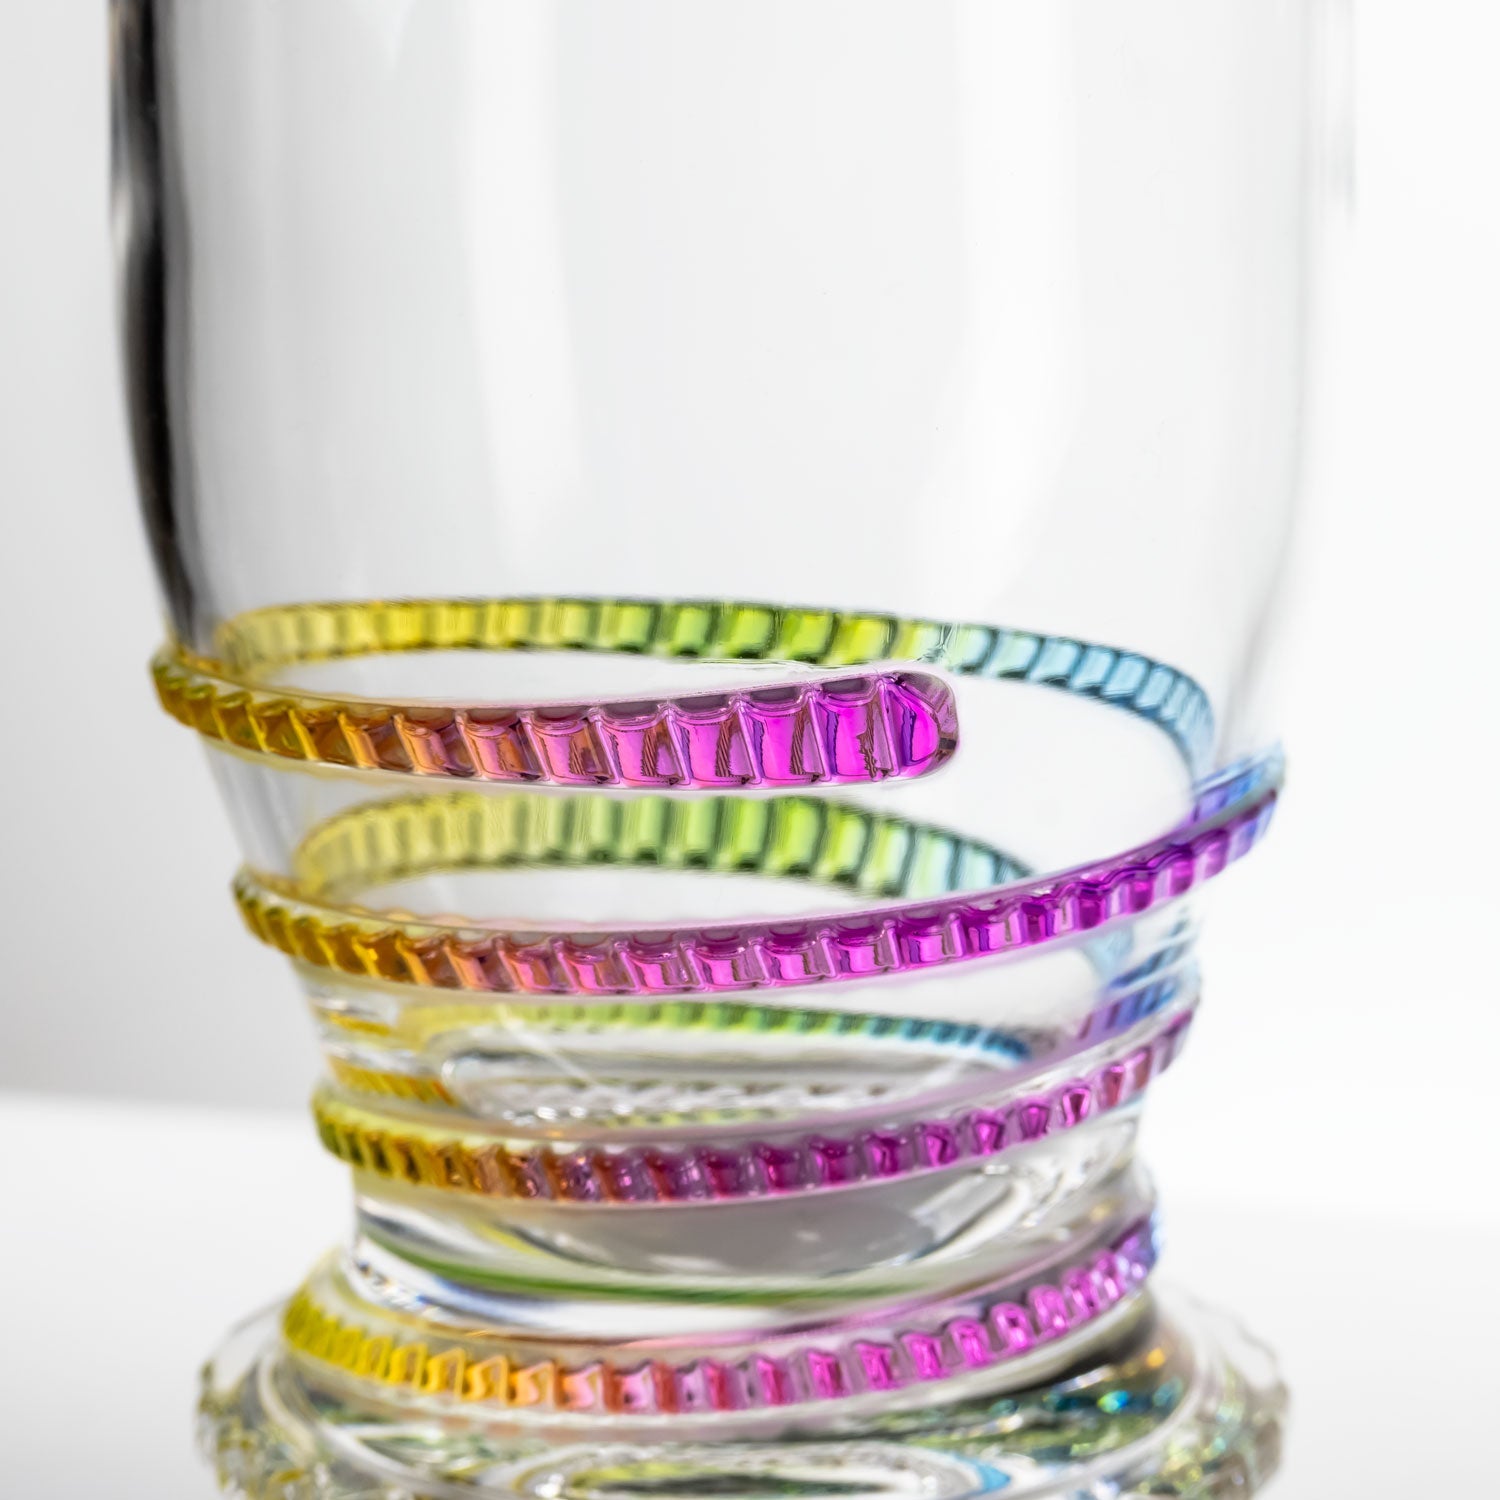 BPA-Free Merritt Designs Rope Rainbow 13oz Acrylic Tumbler close up